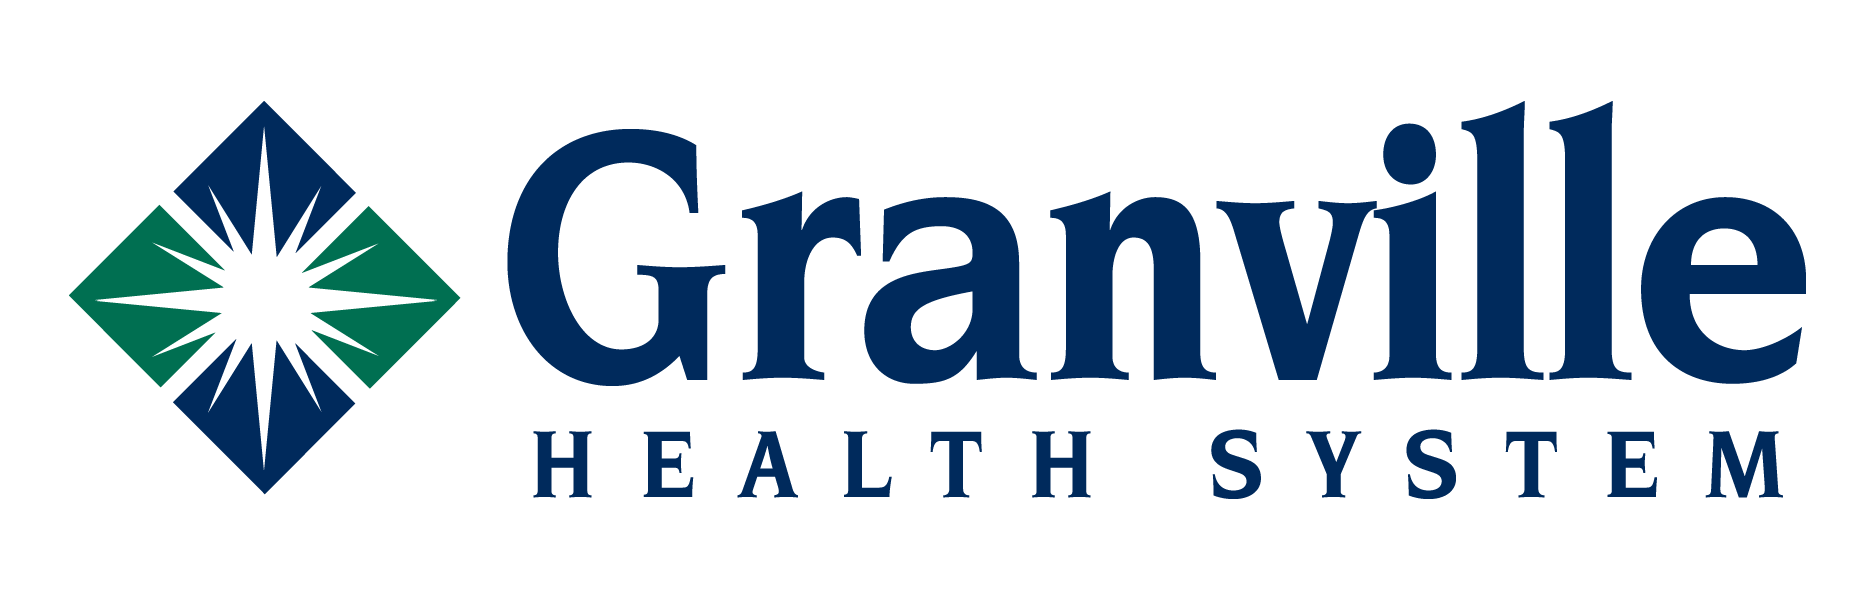 Granville health system